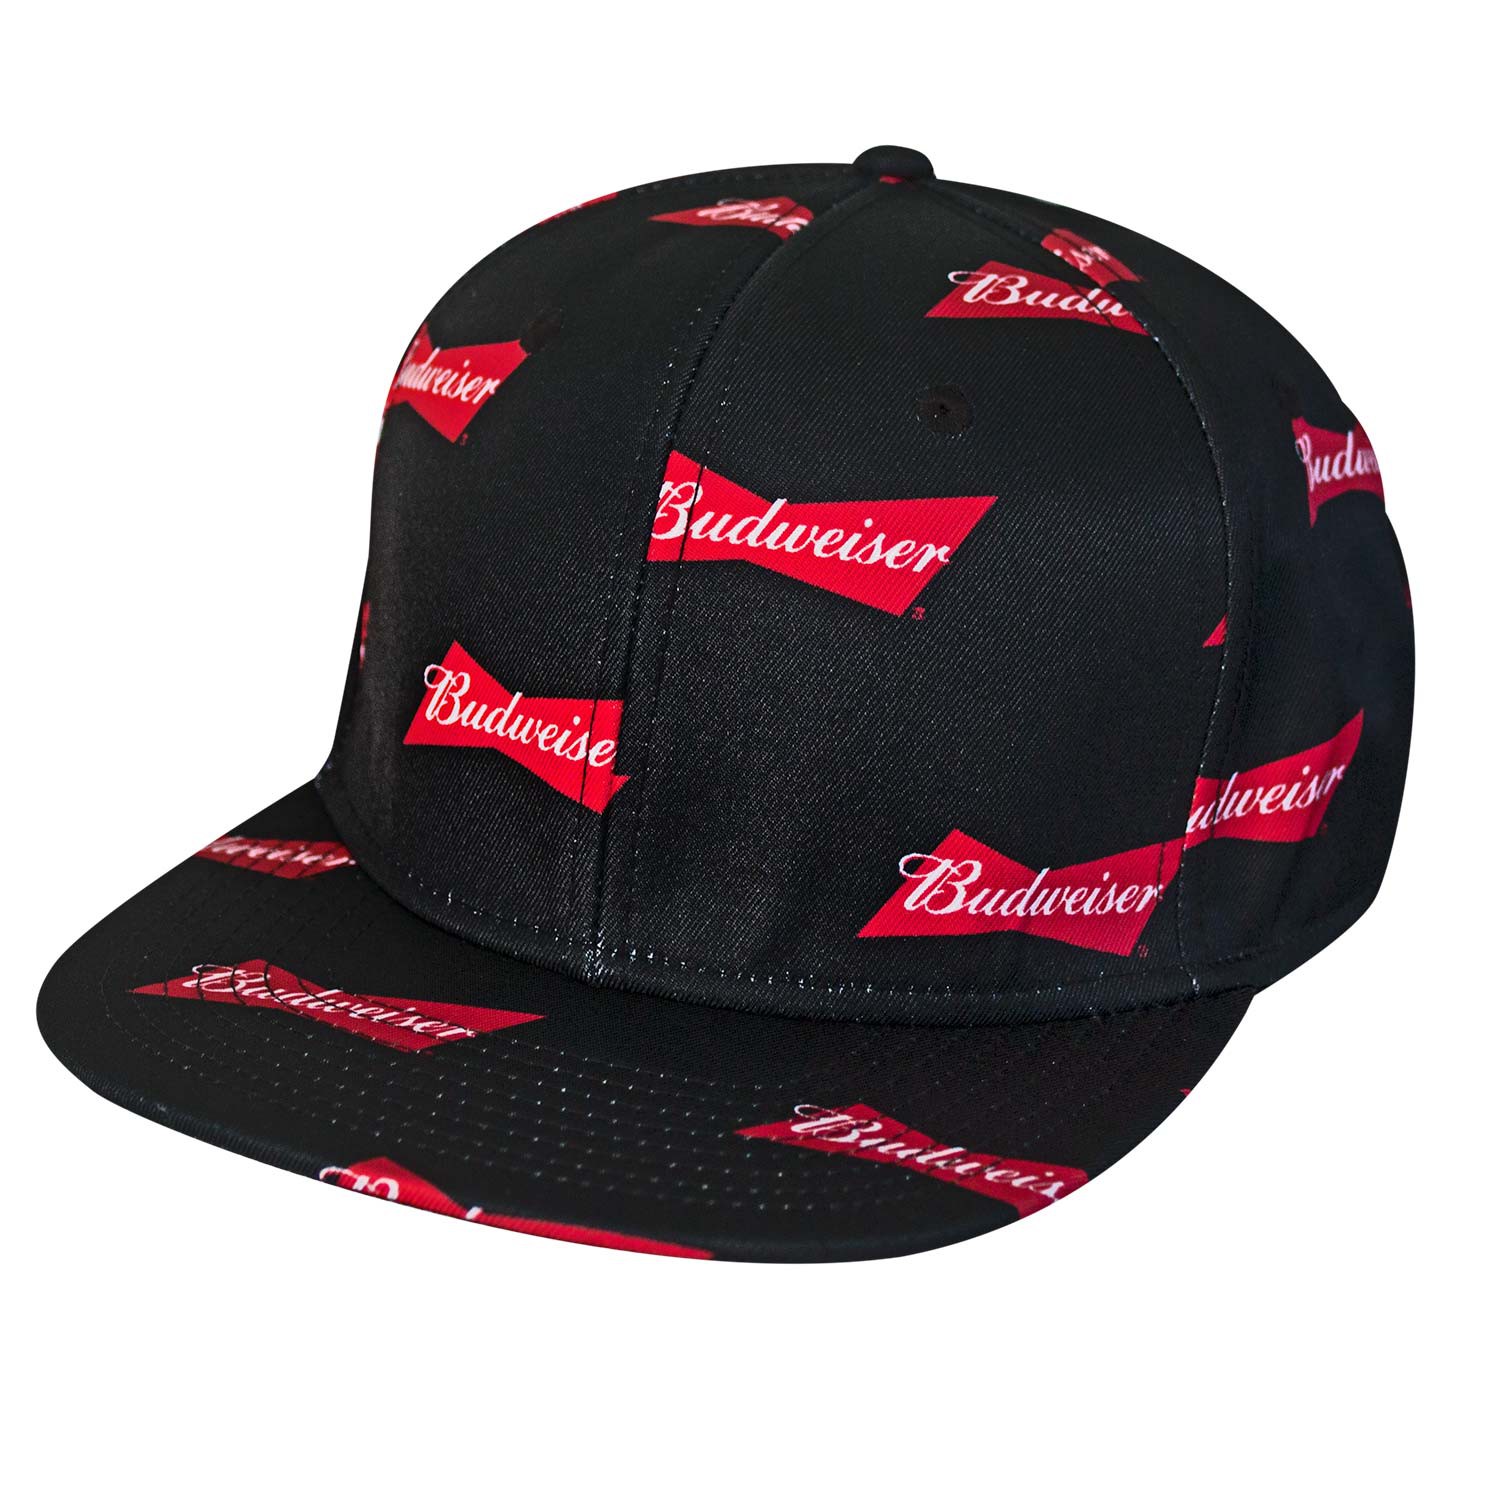 Budweiser All Over Bowtie Logo Black Snapback Hat